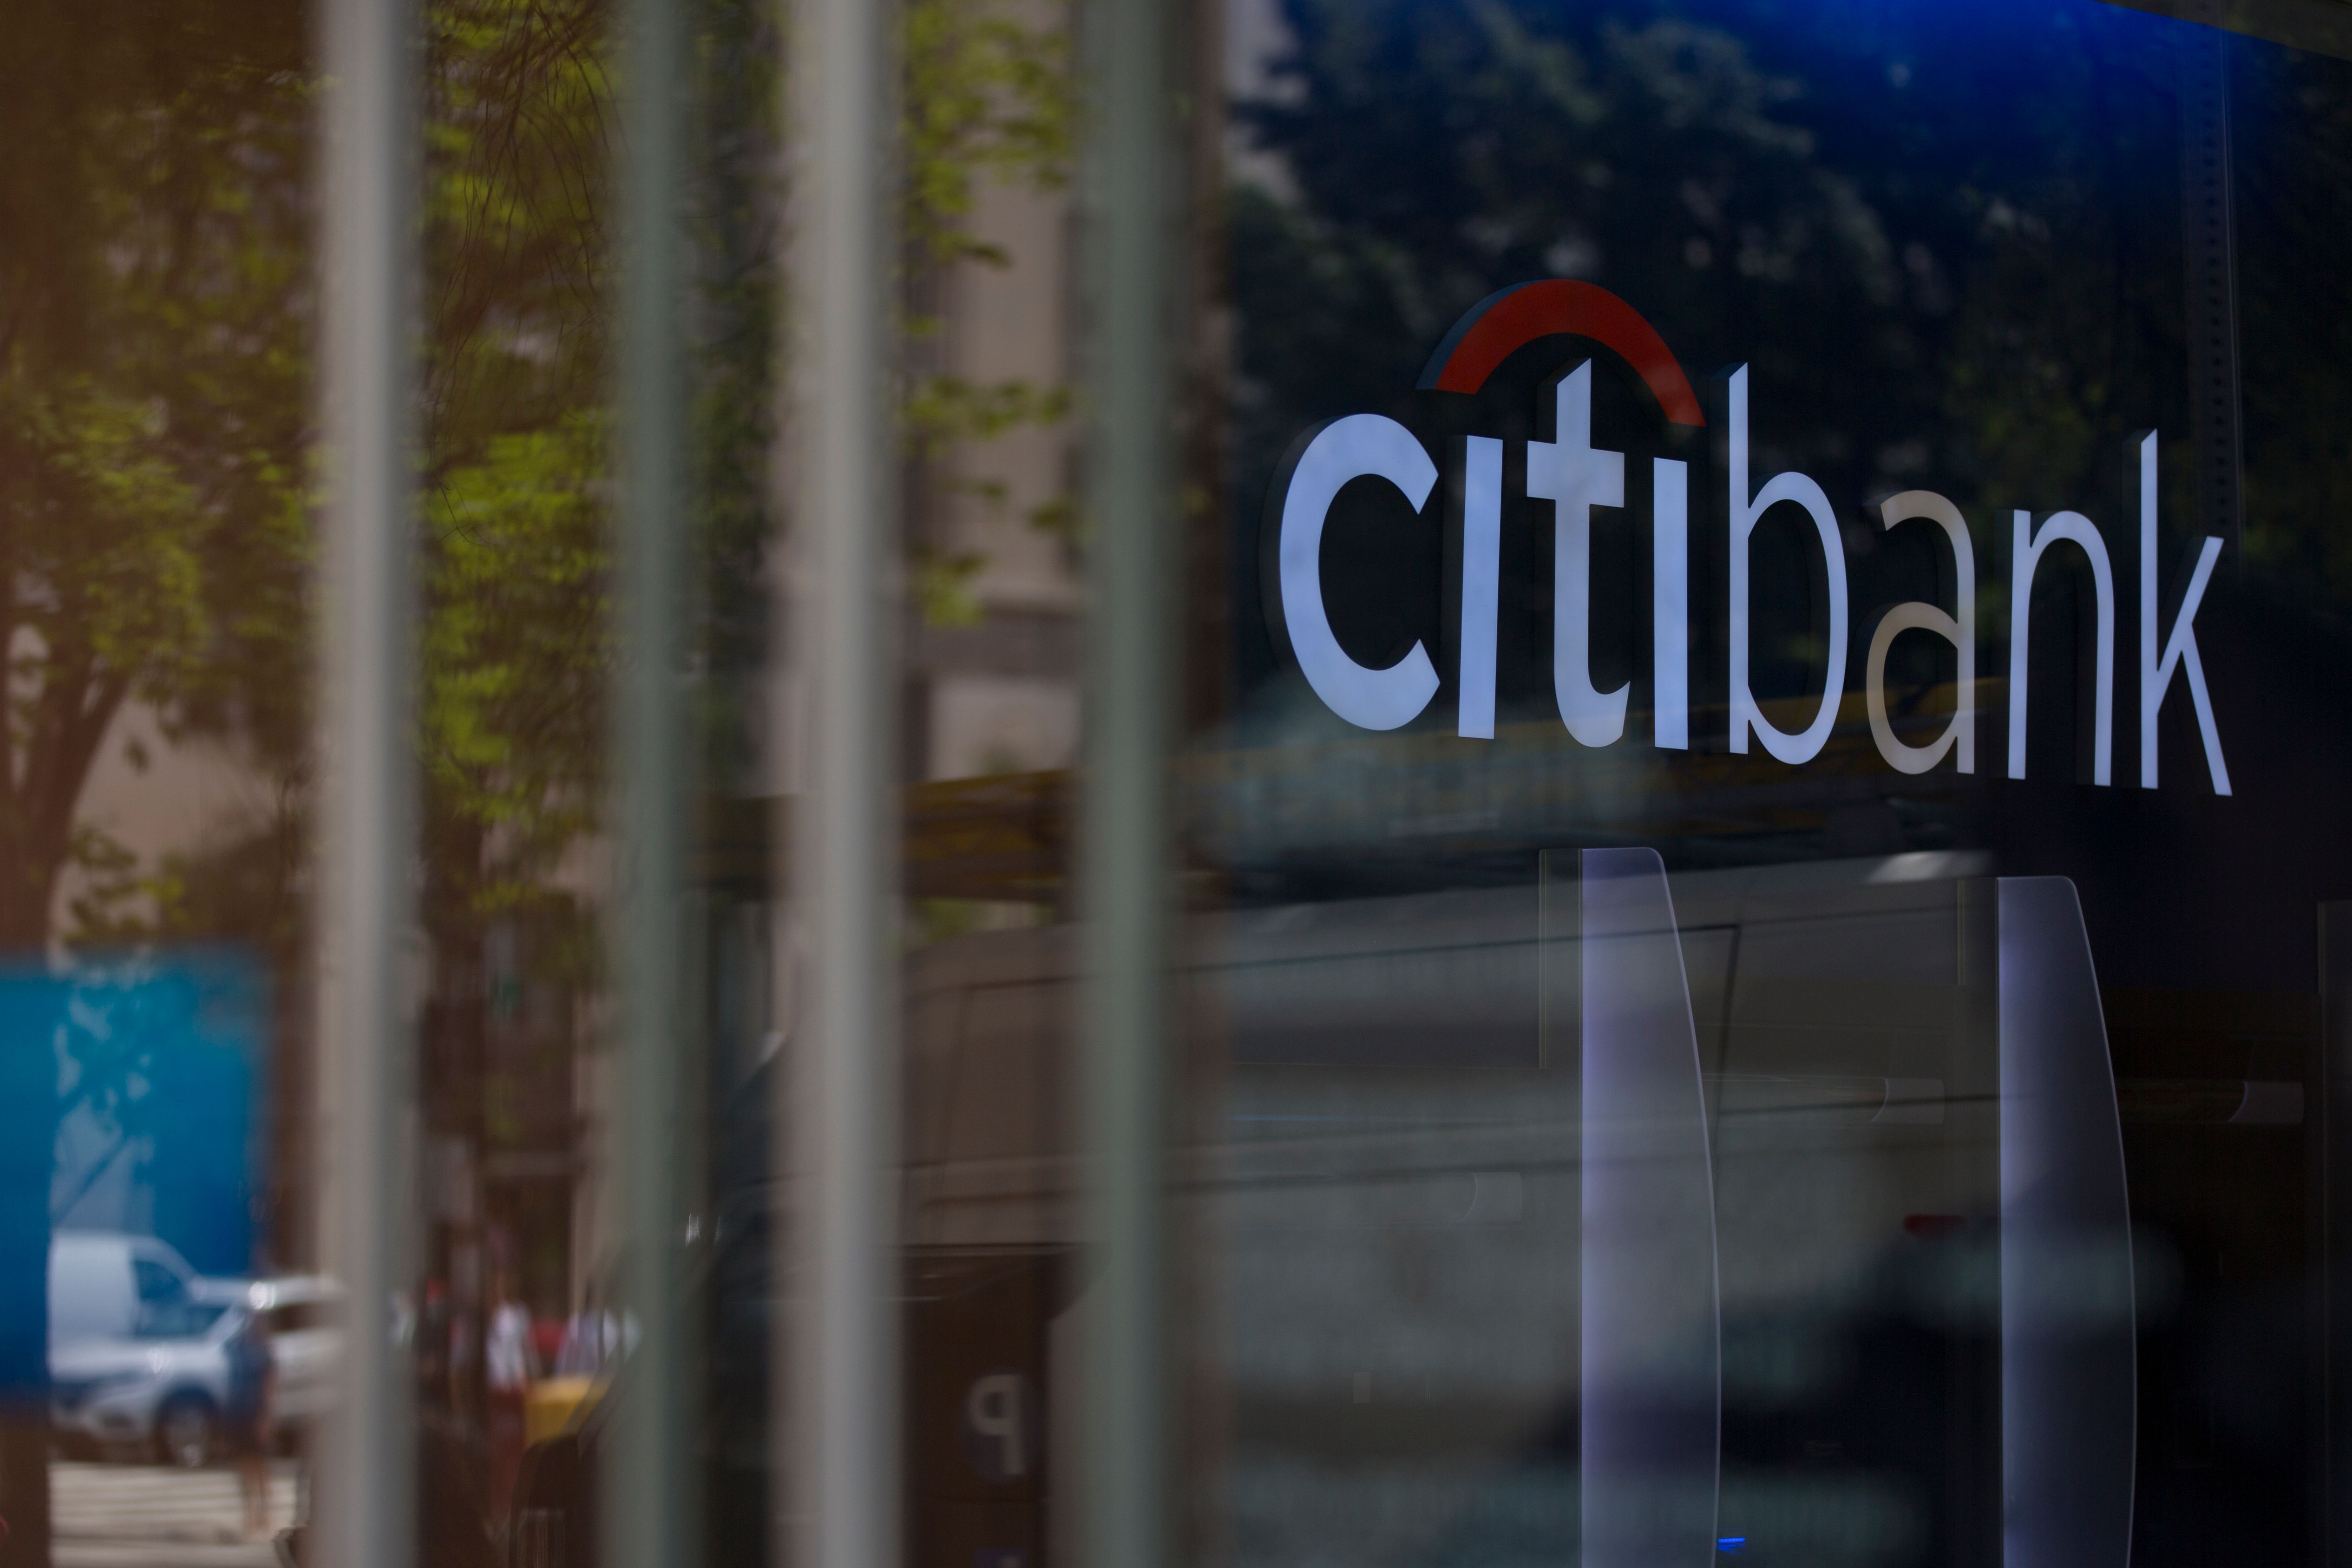 Citi Bank logo as seen outside a building